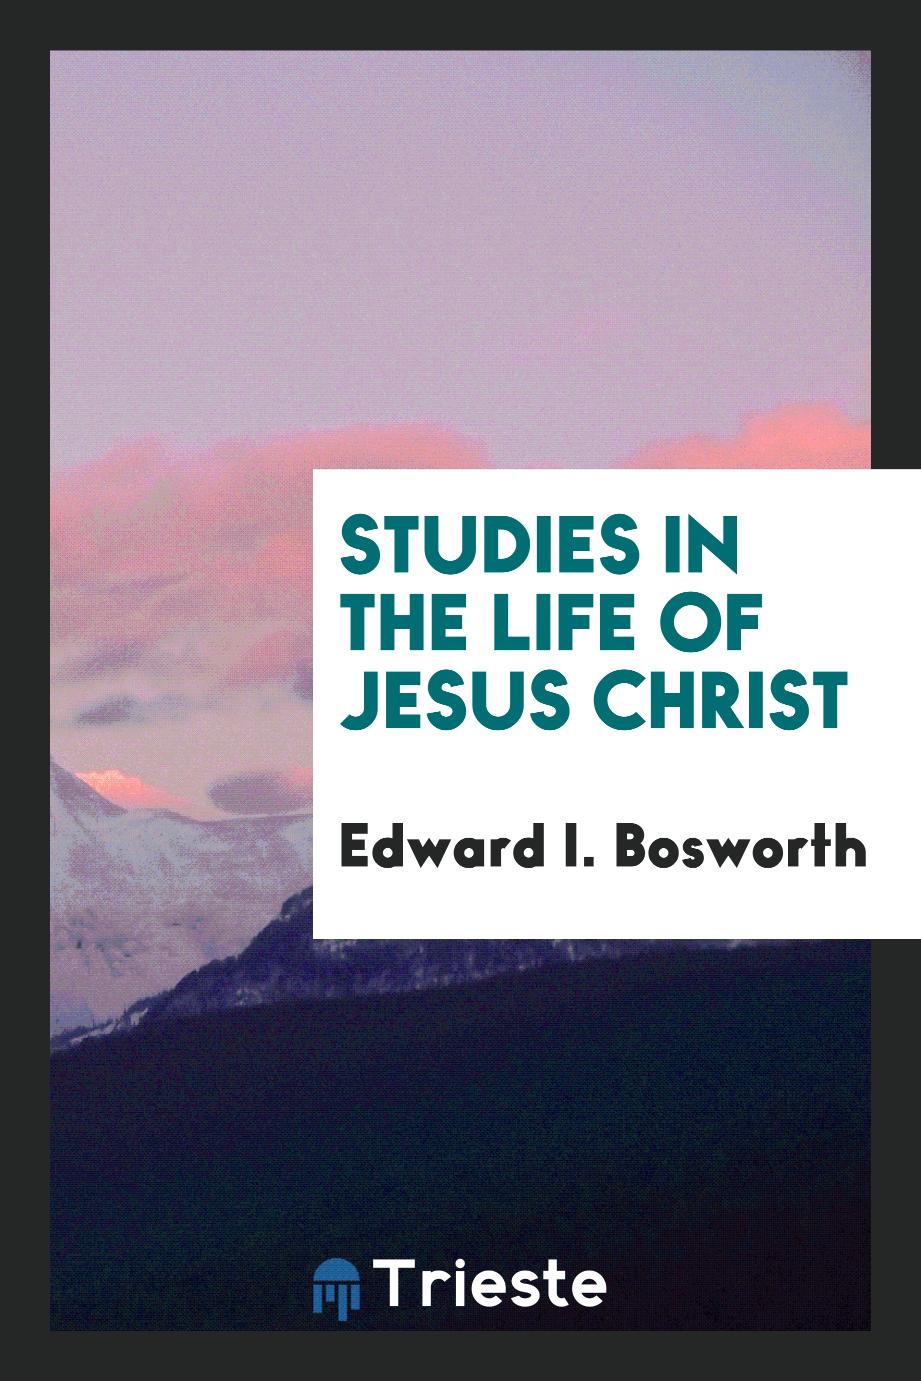 Edward I. Bosworth - Studies in the life of Jesus Christ